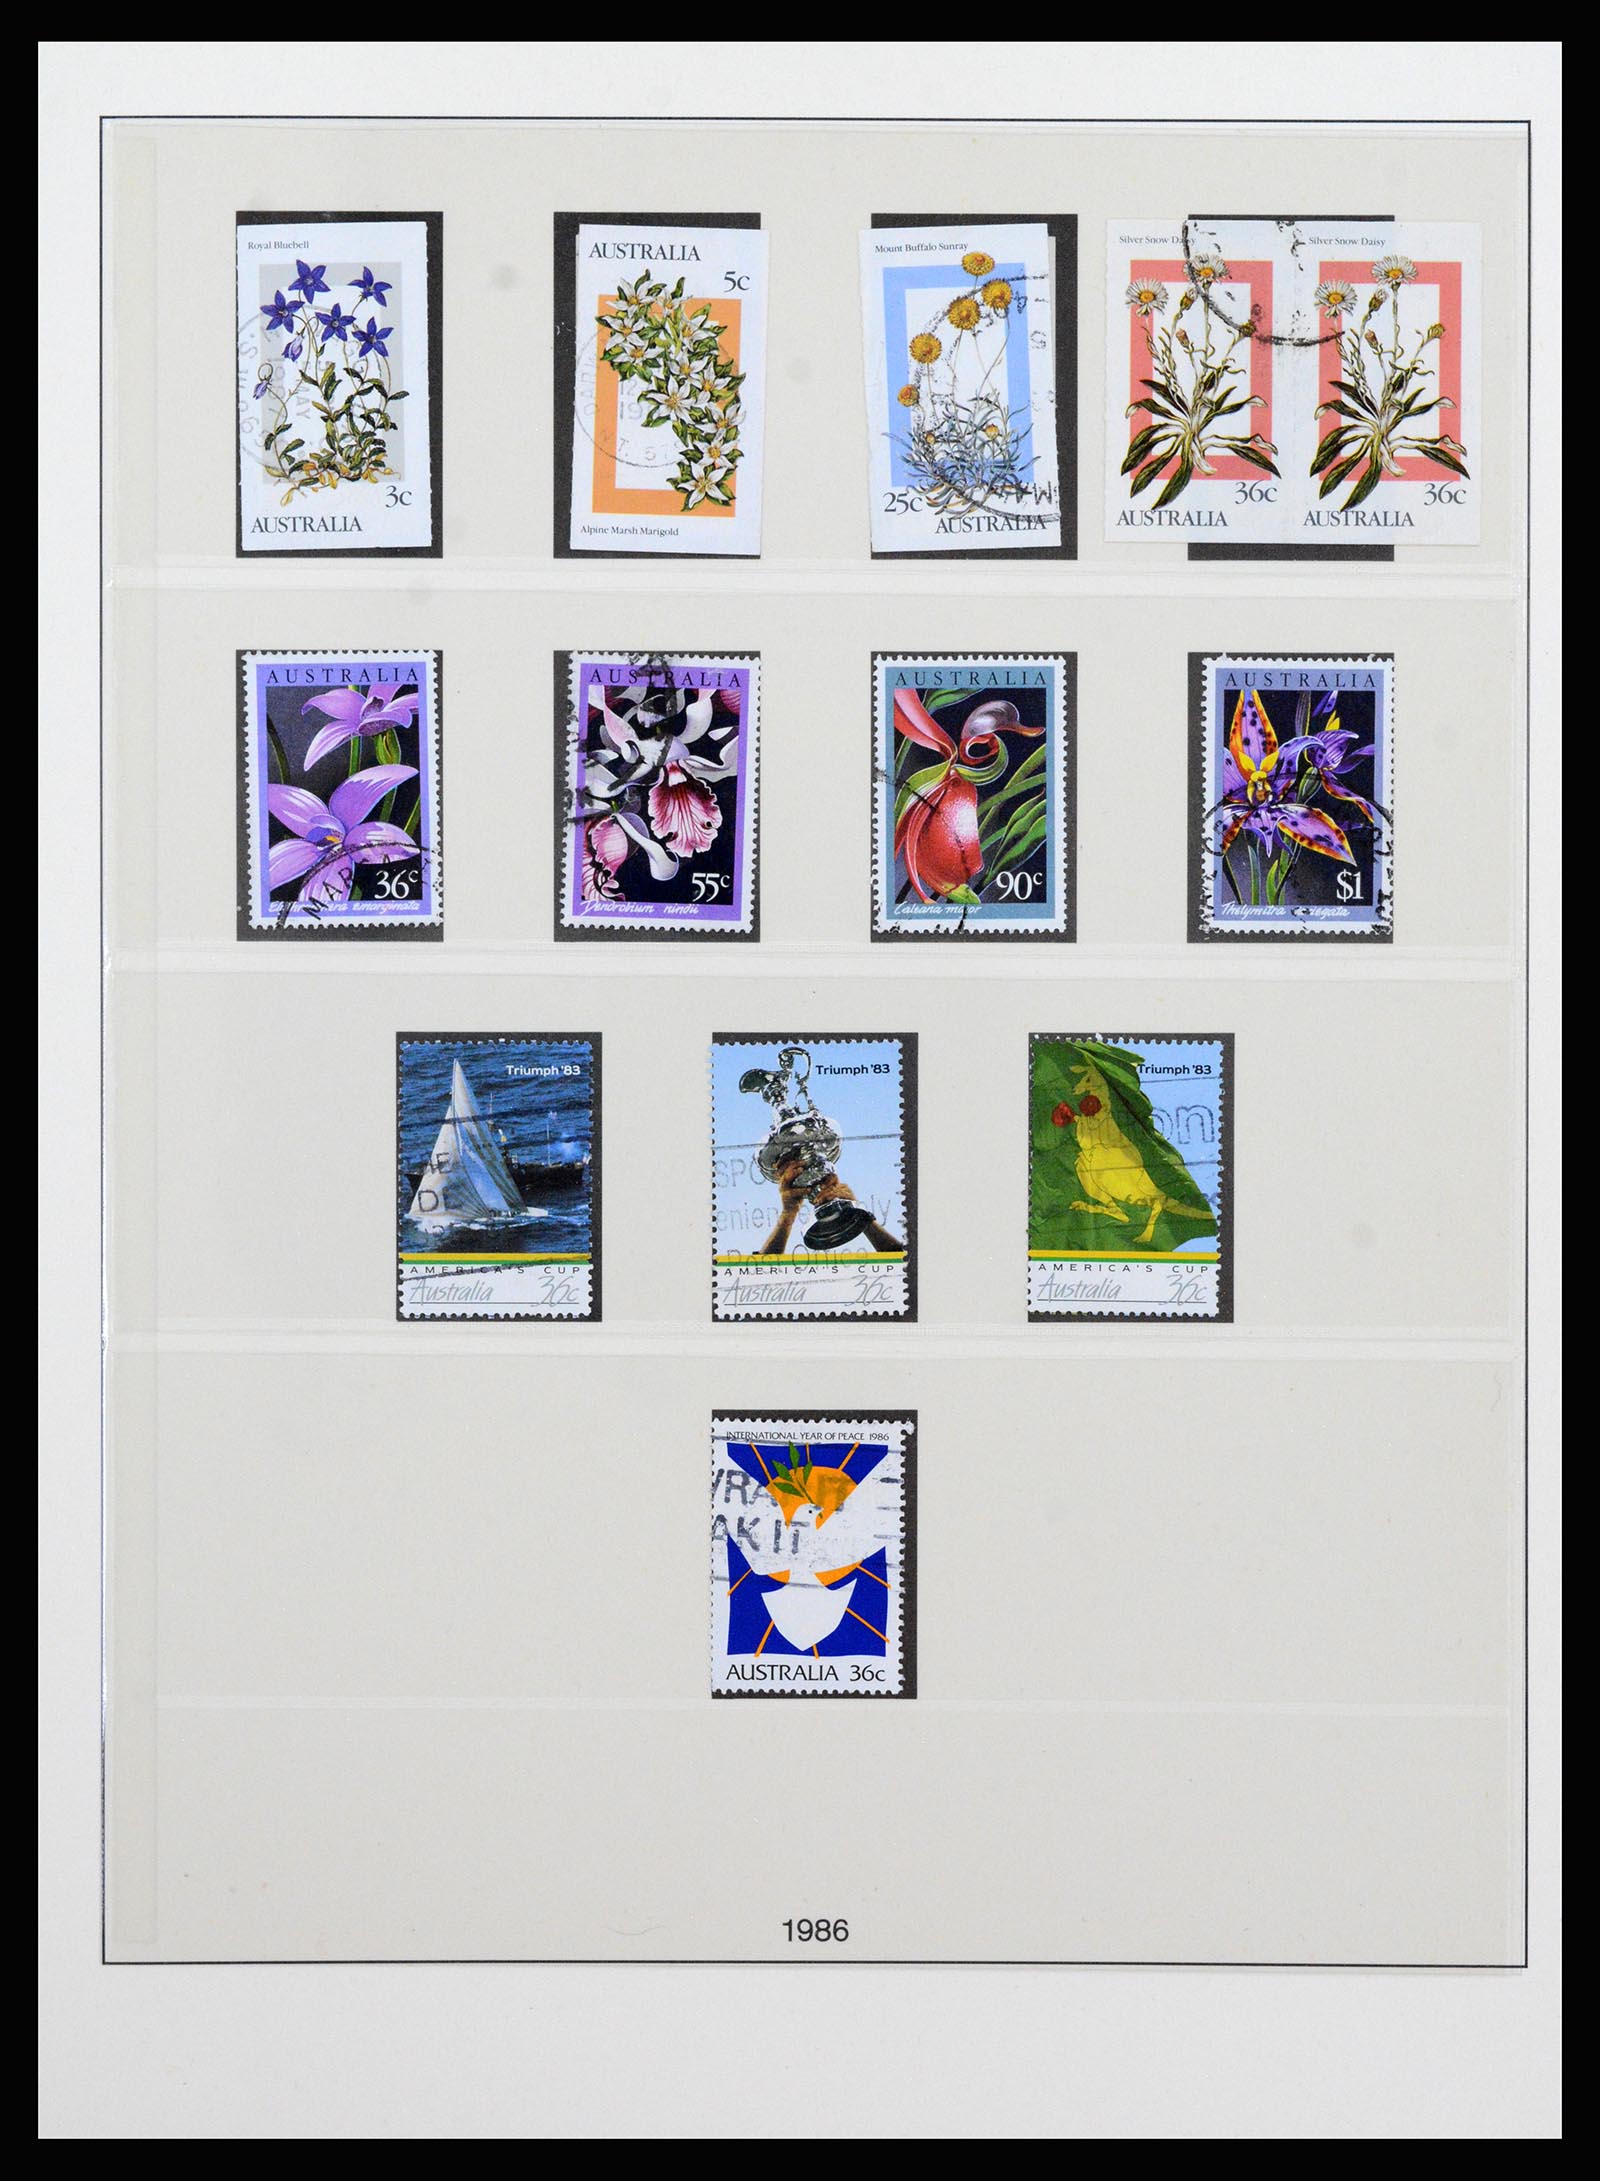 37259 072 - Stamp collection 37259 Australia 1951-2006.